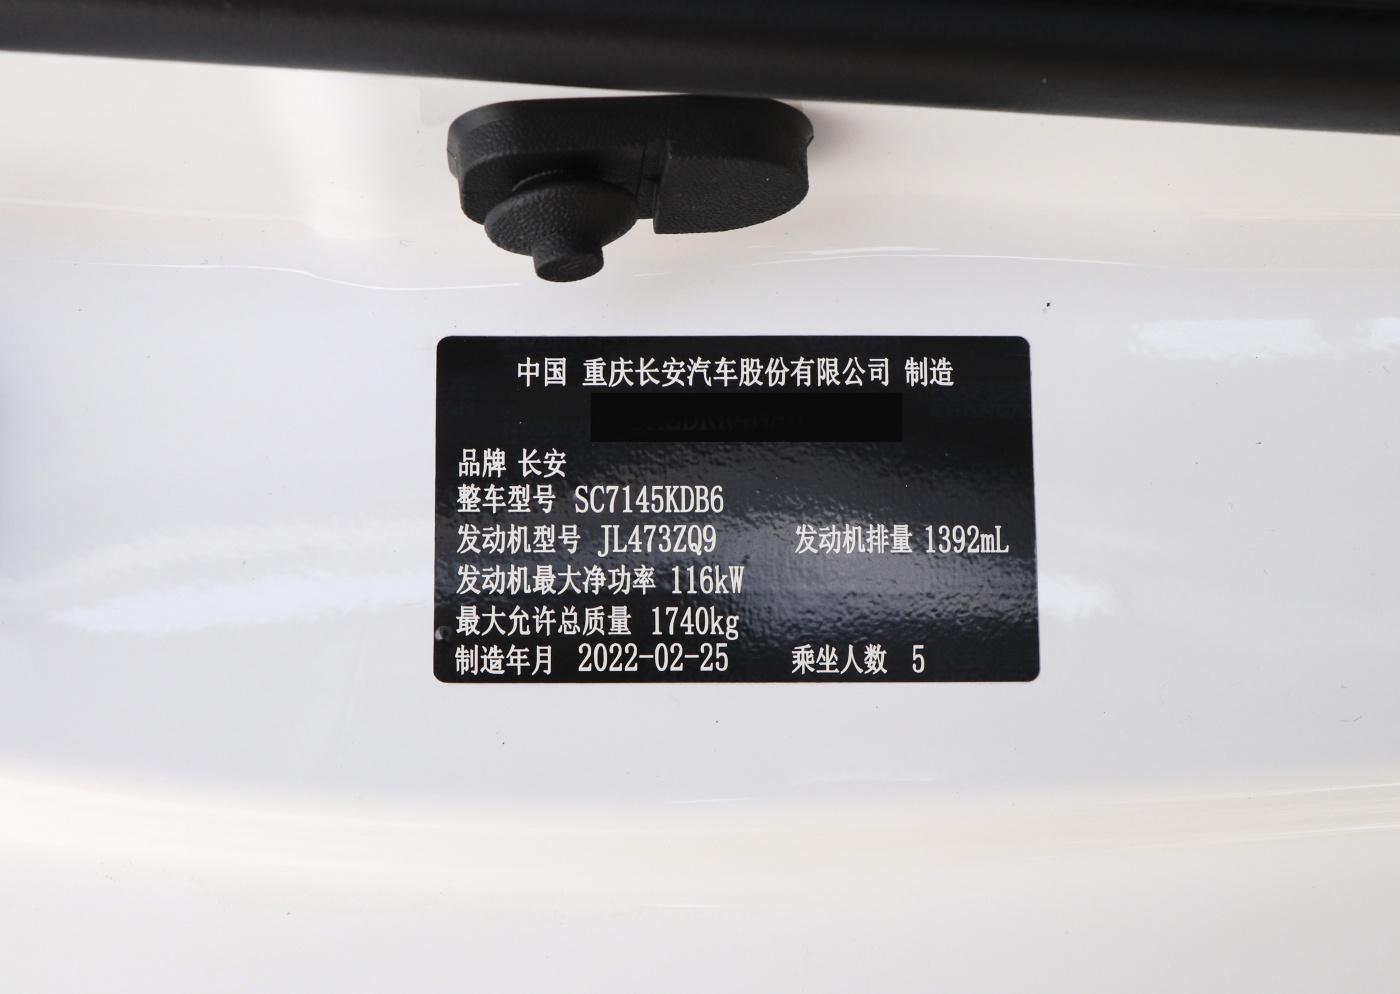 ChangAn Yidong Automobile nameplate